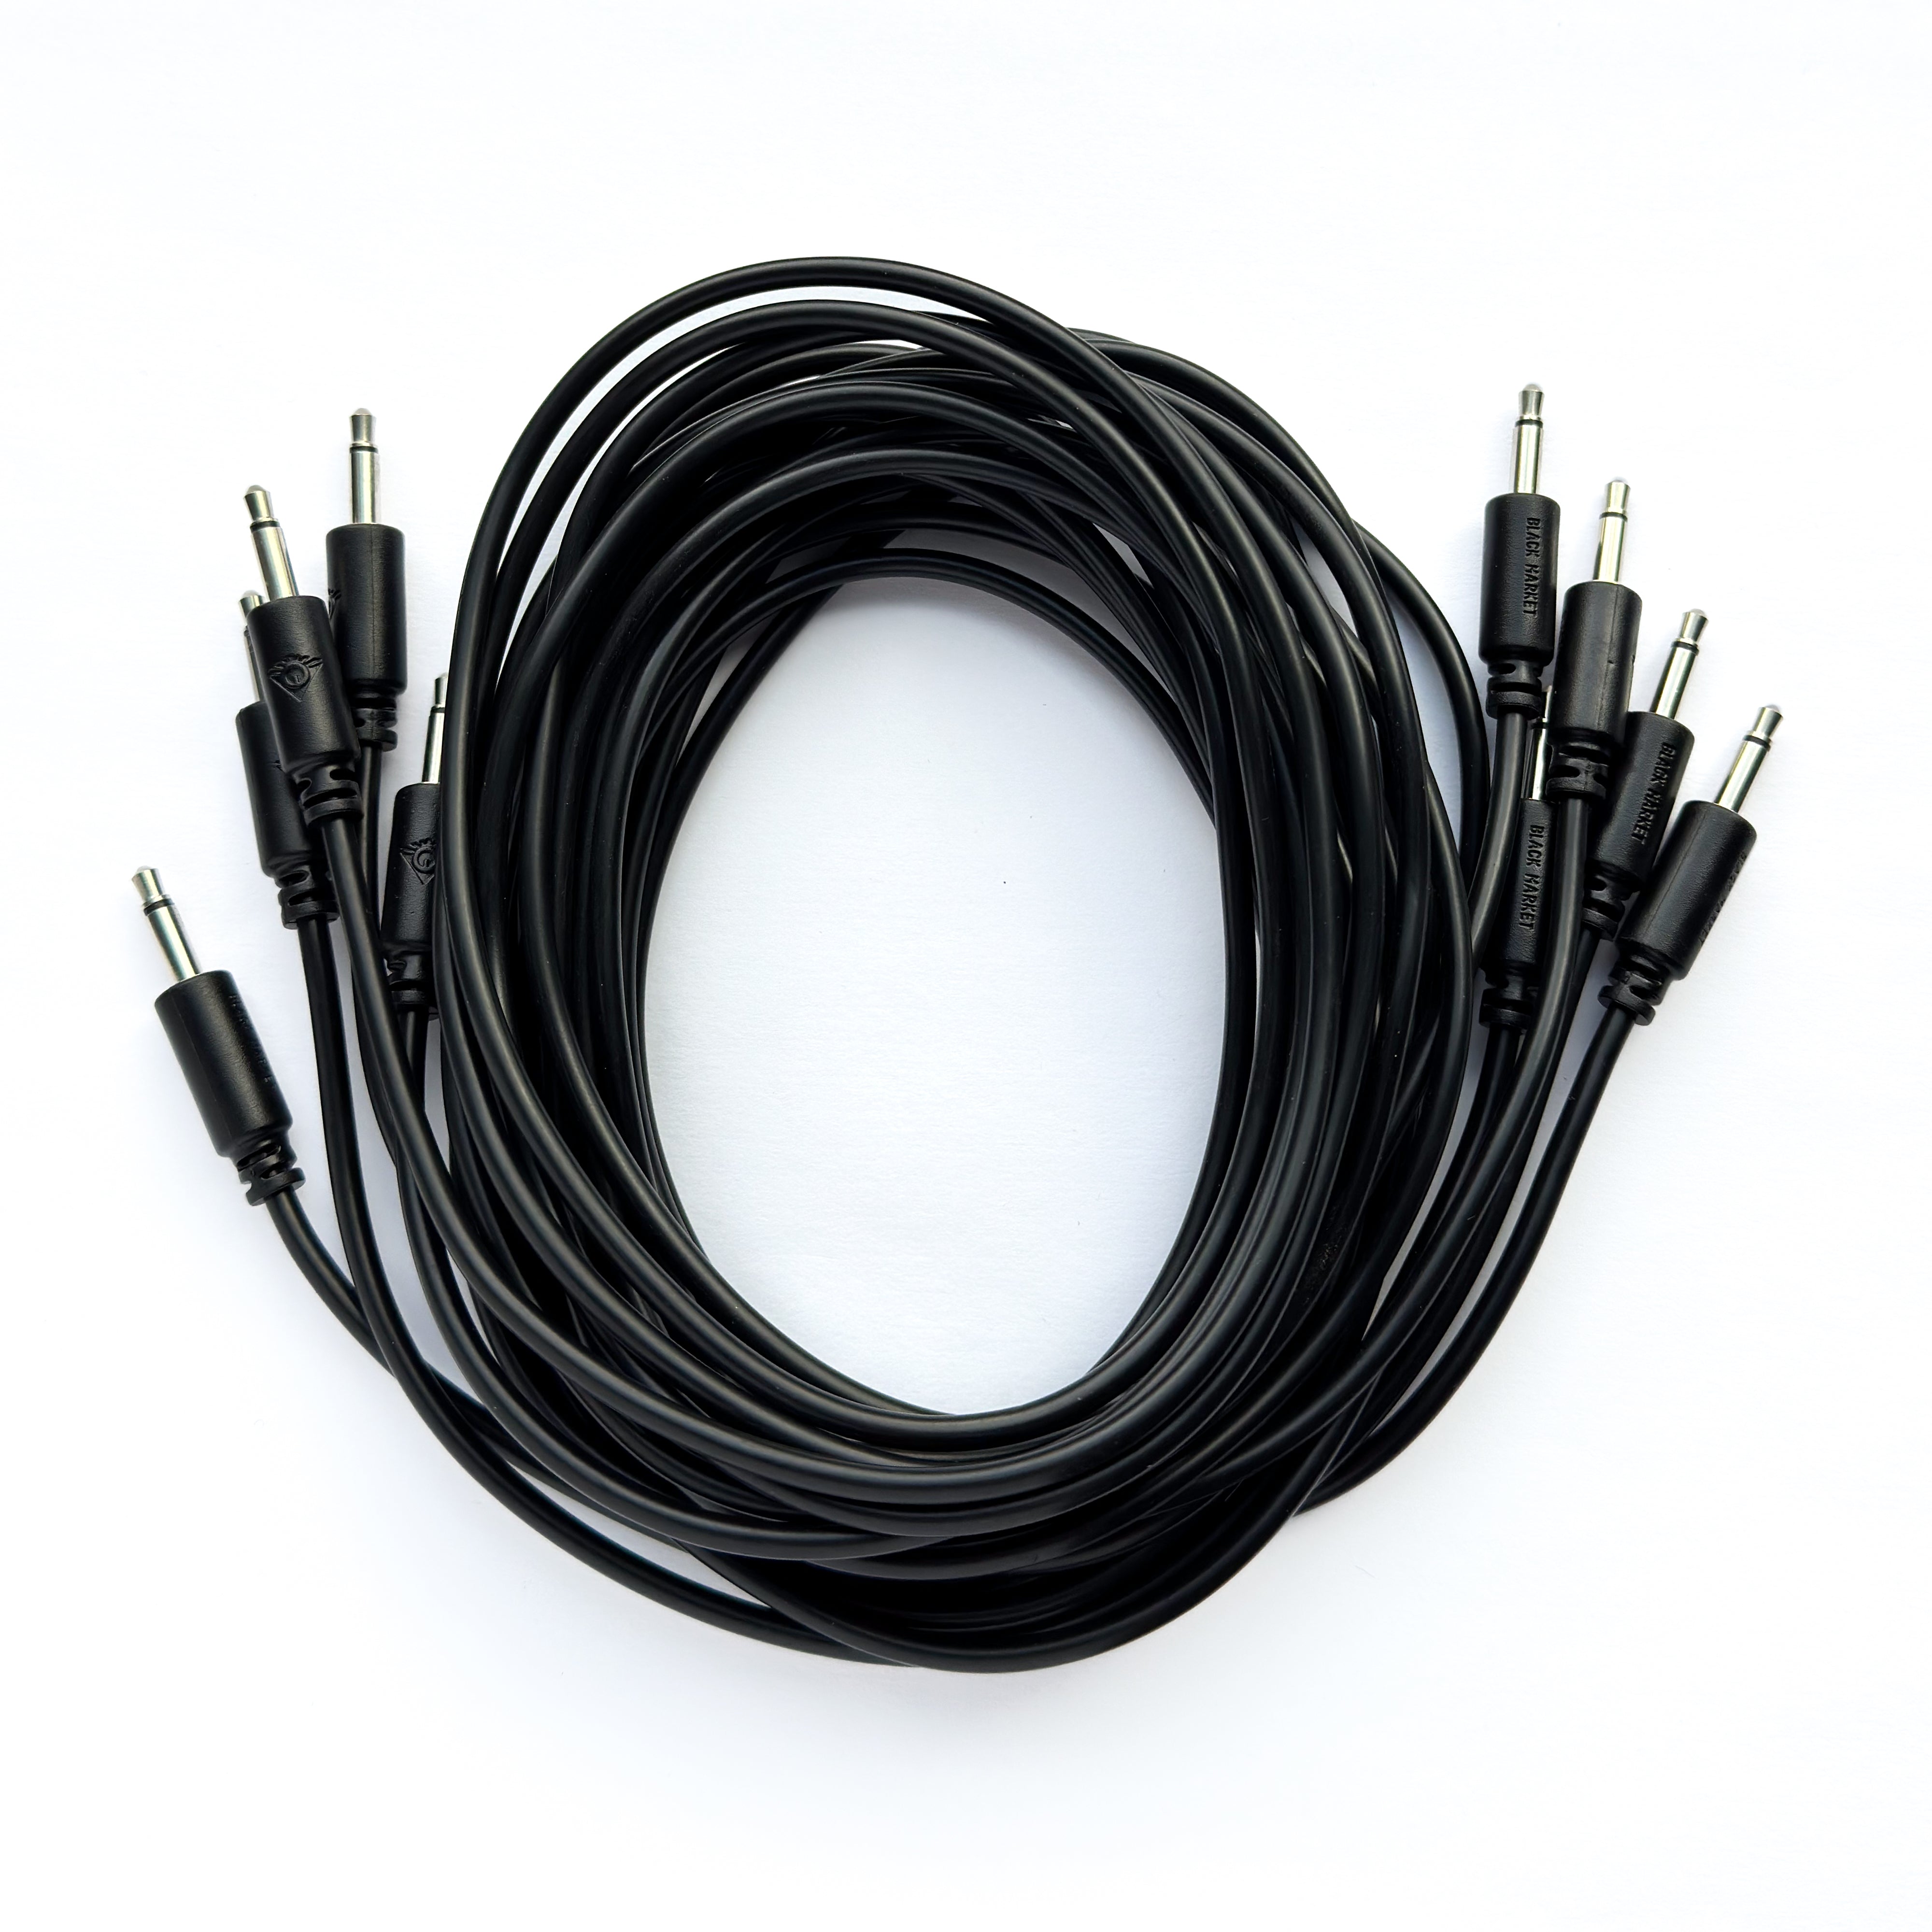 Black Market Modular 3.5mm Patch Cable 5-Pack - 100cm/40" - Black View 1